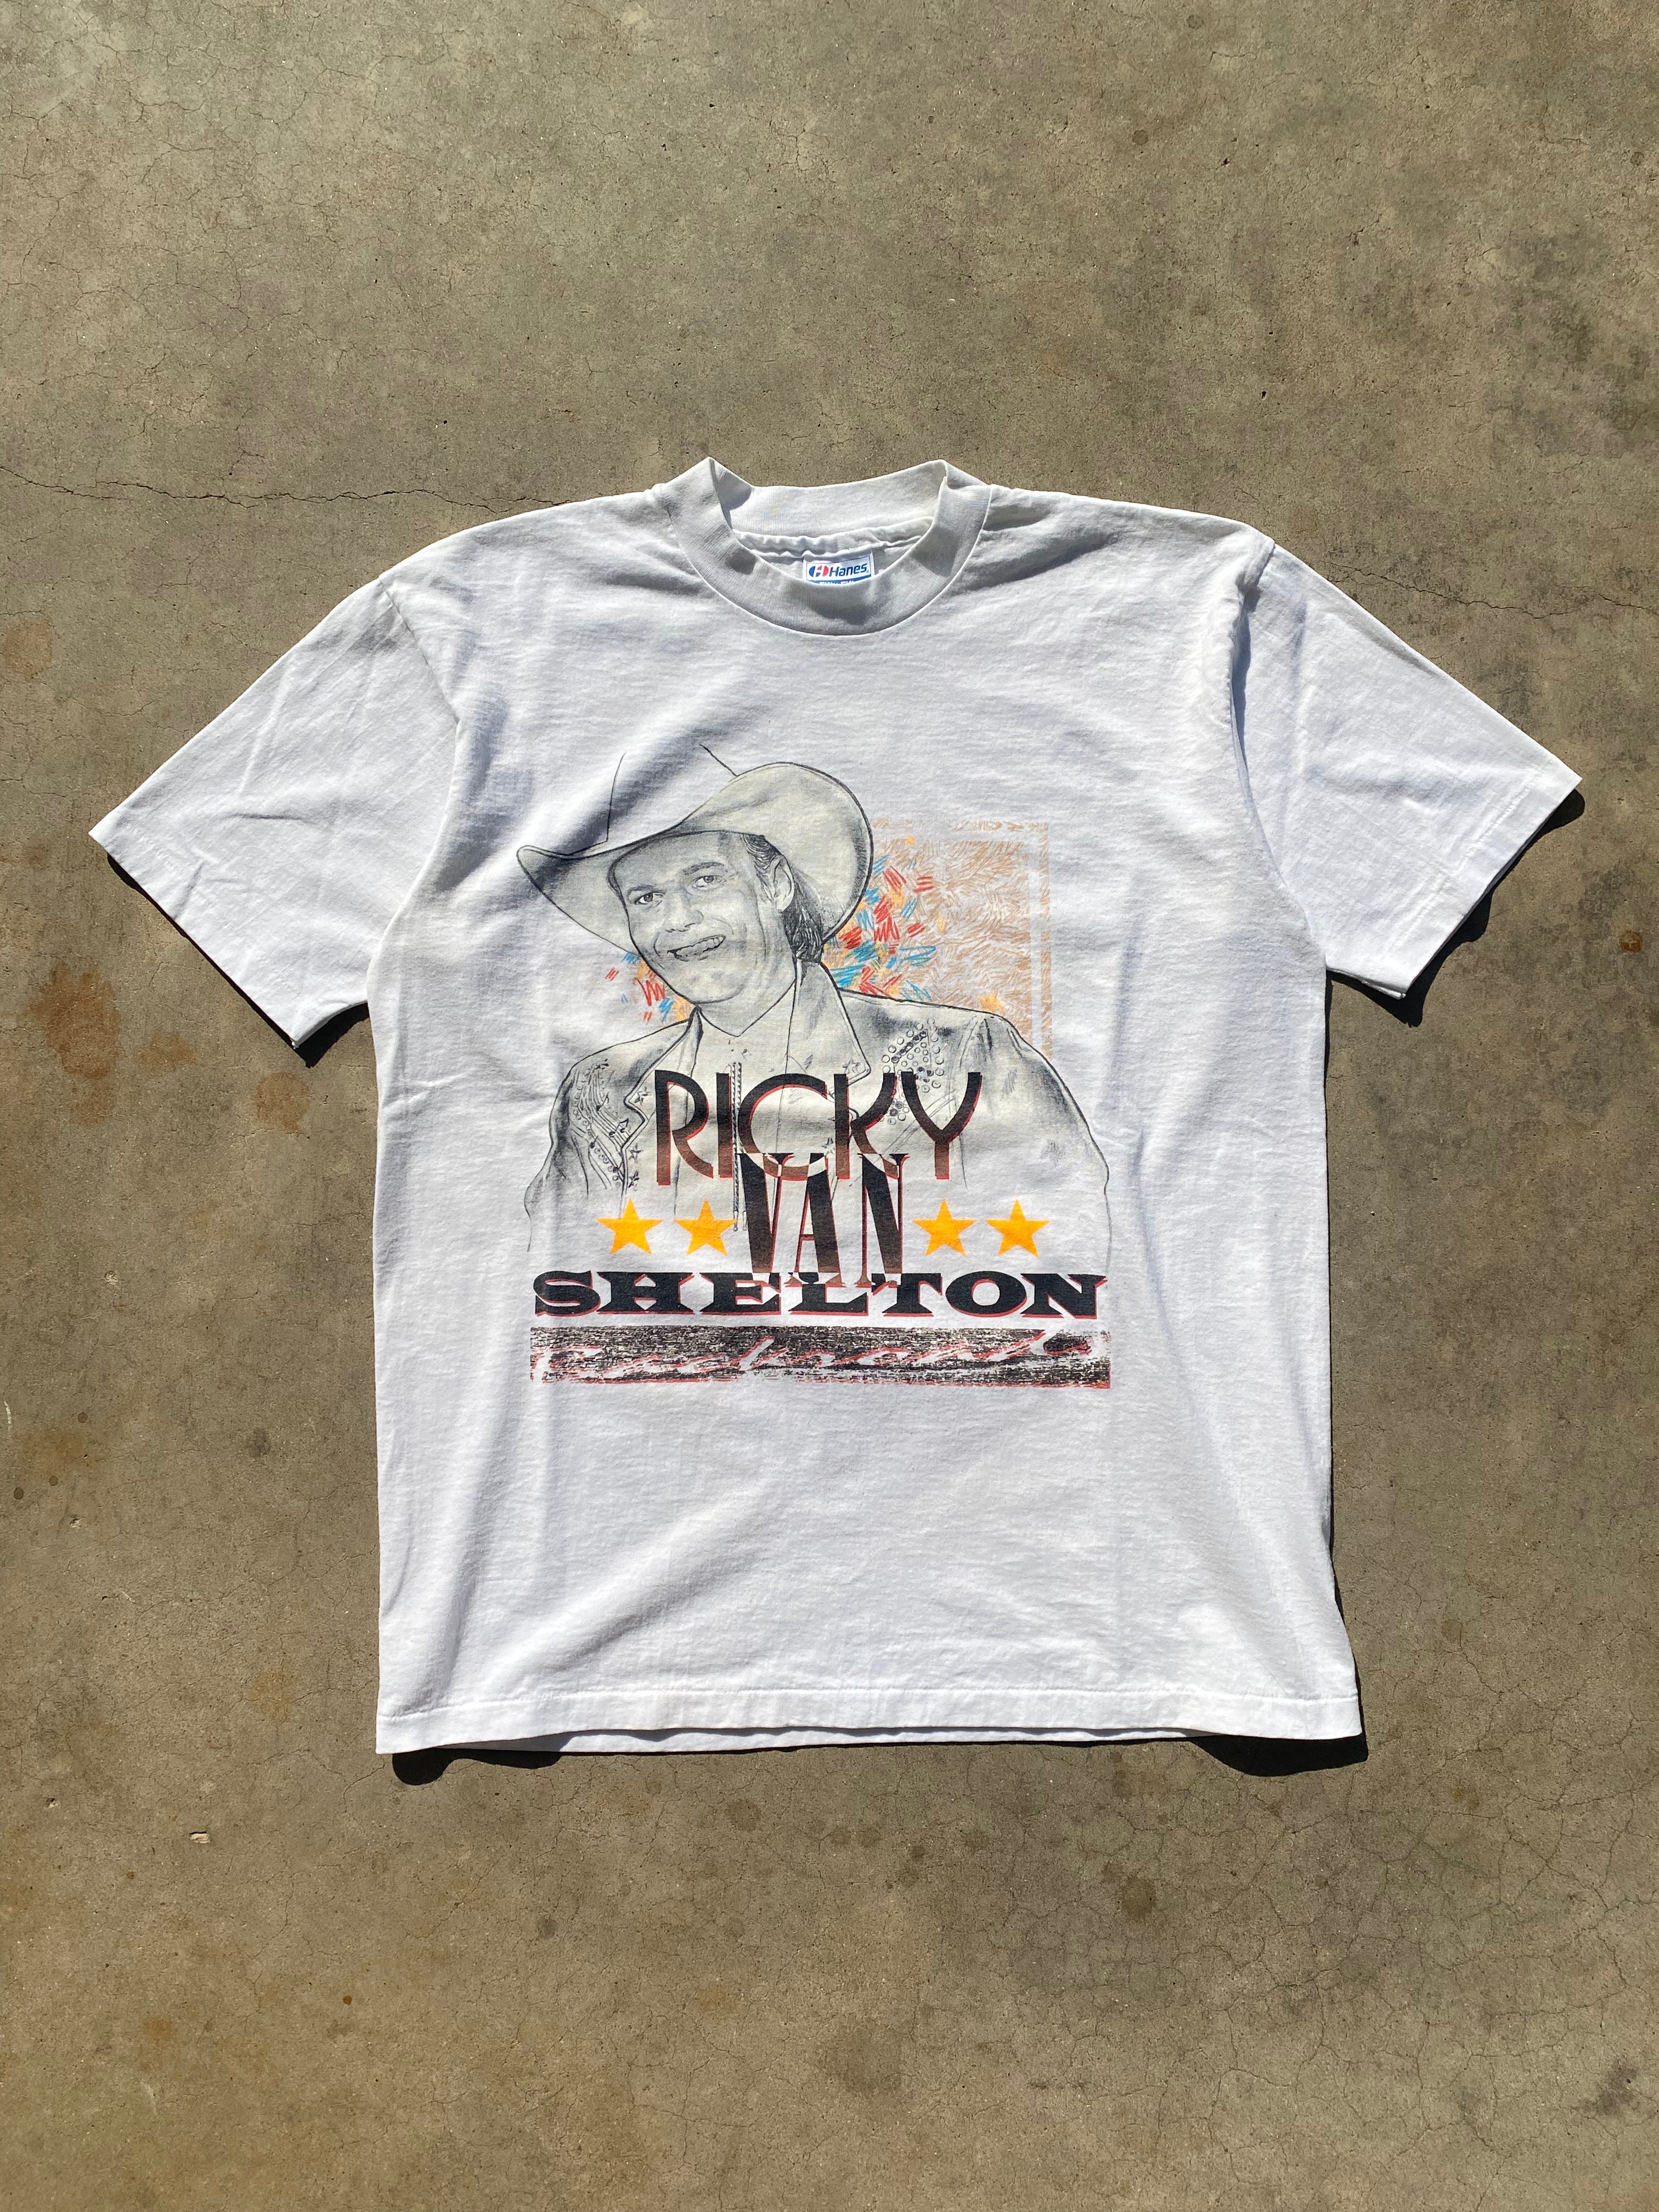 1991 Ricky Van Shelton “I Am A Simple Man” Tour T-Shirt (M/L)